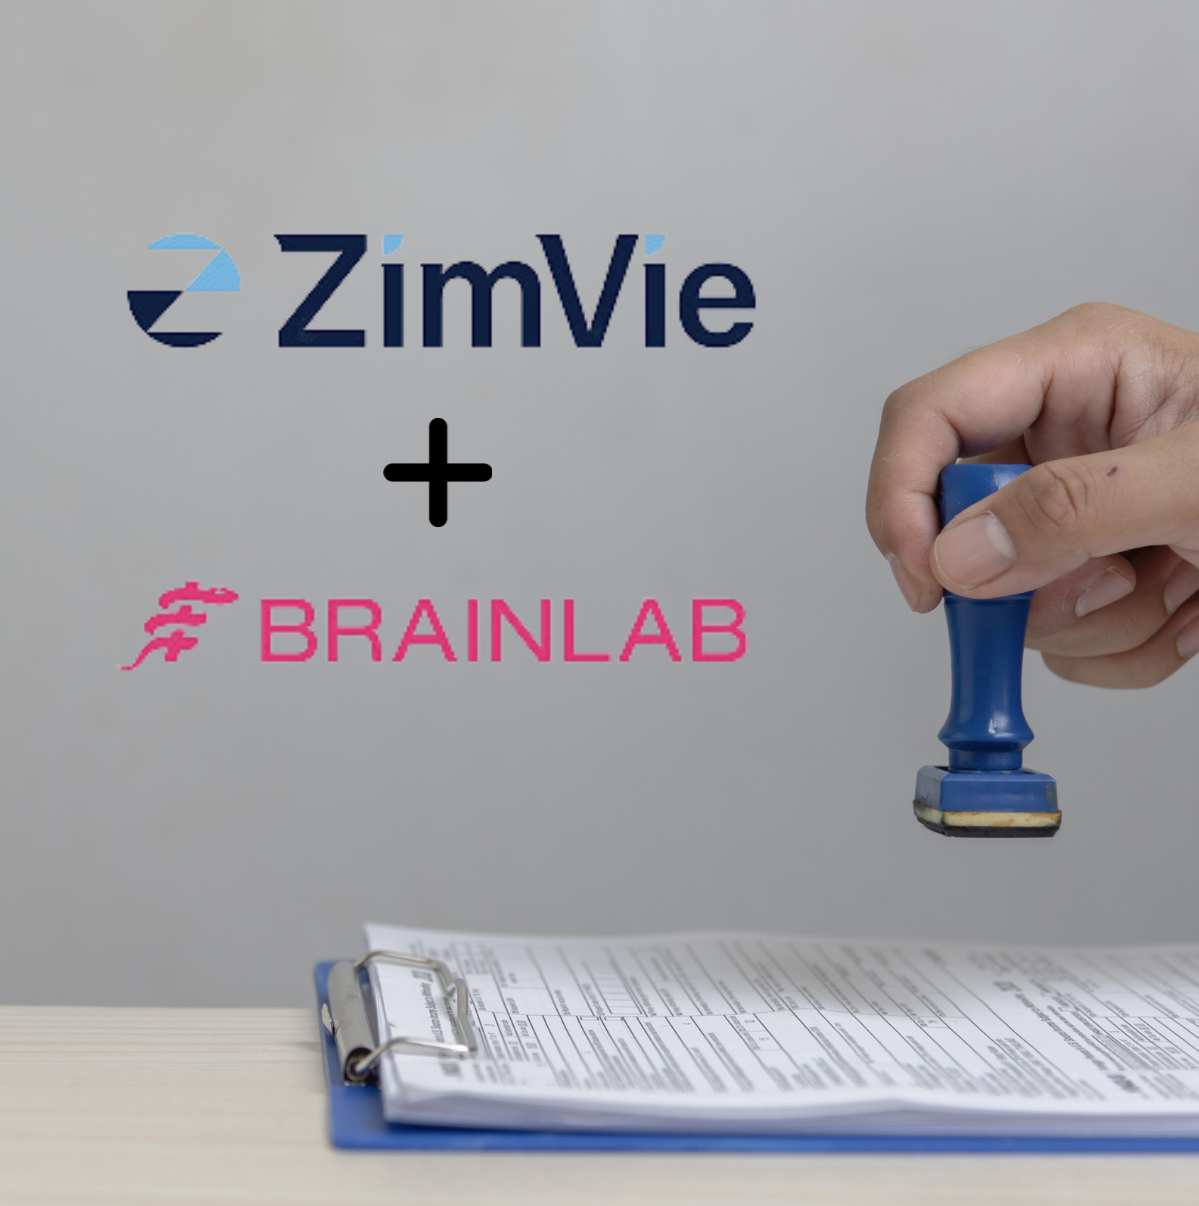 ZimVie and BrainLab